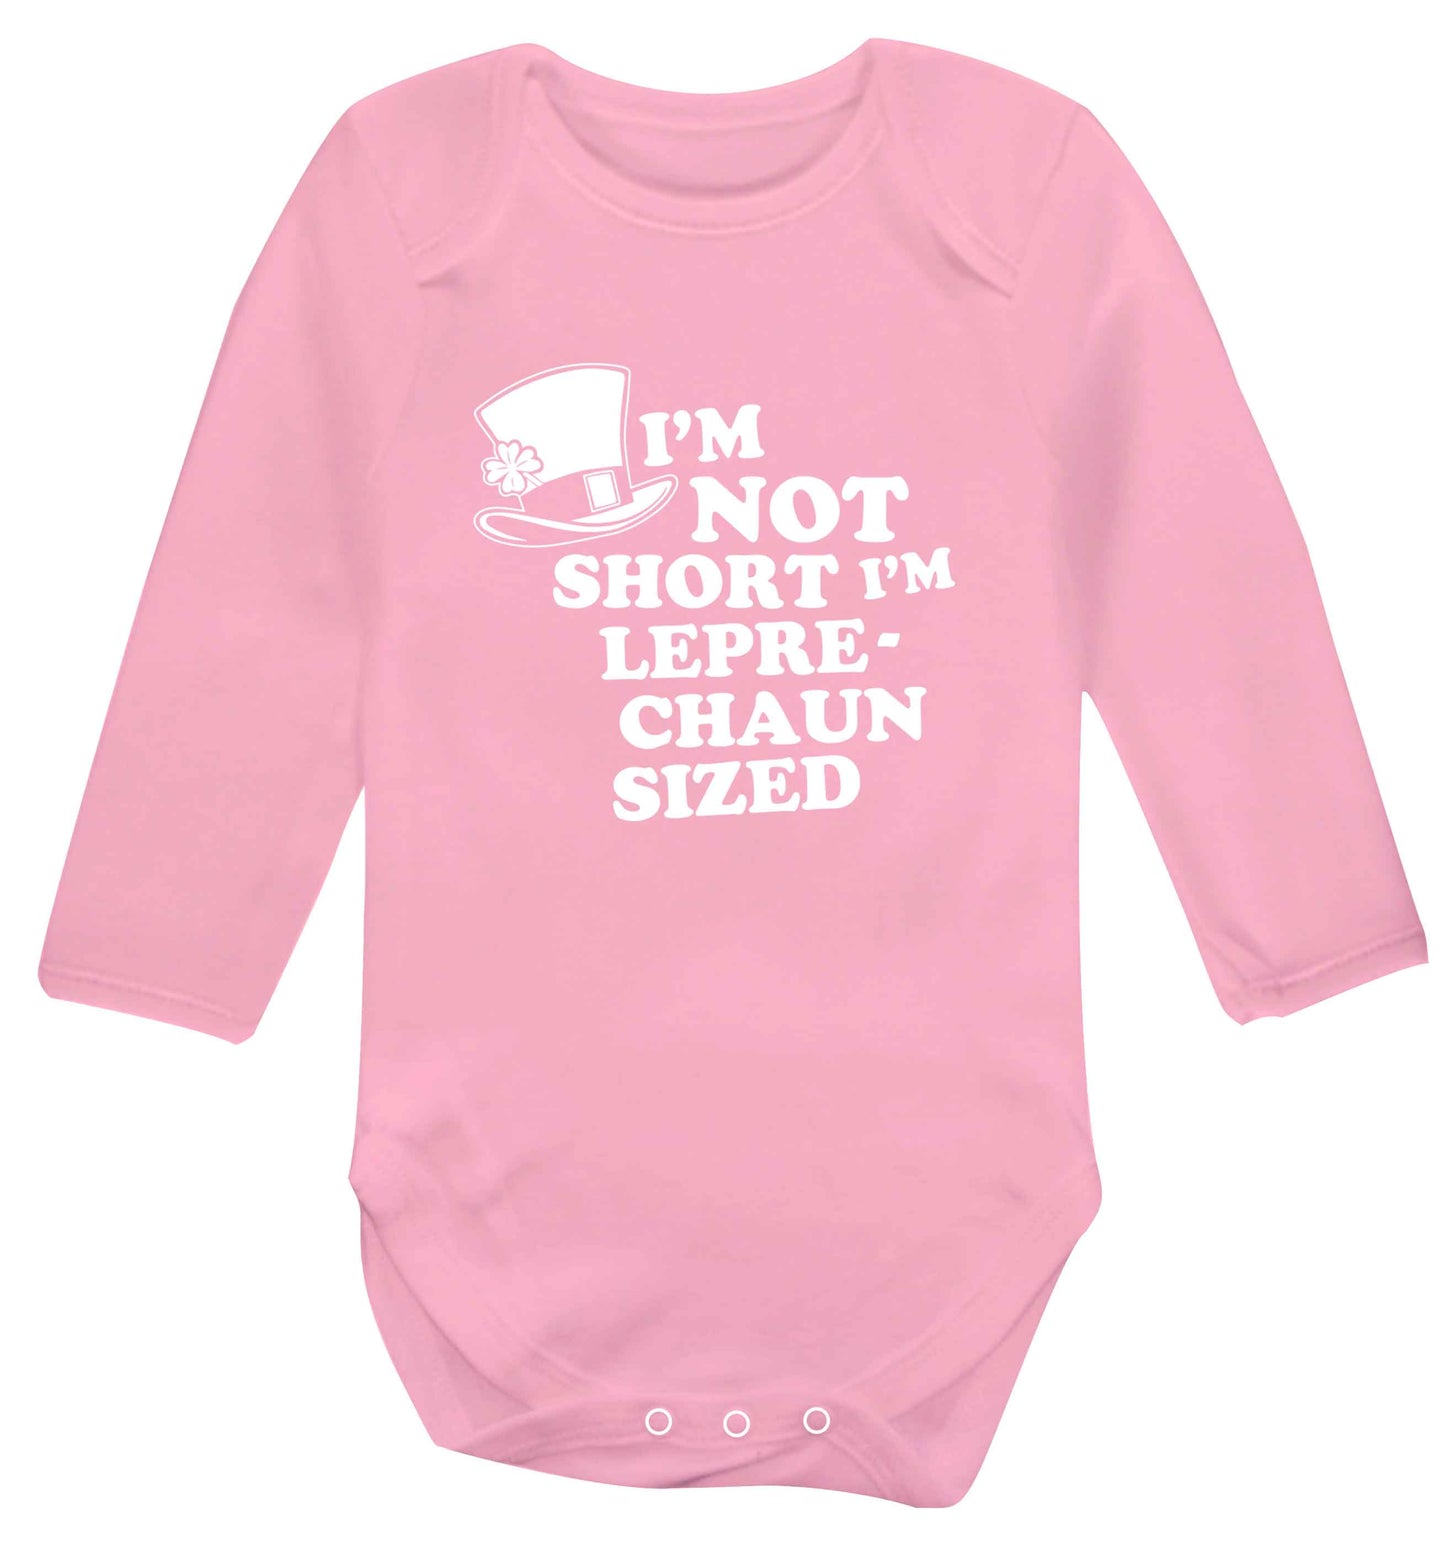 I'm not short I'm leprechaun sized baby vest long sleeved pale pink 6-12 months